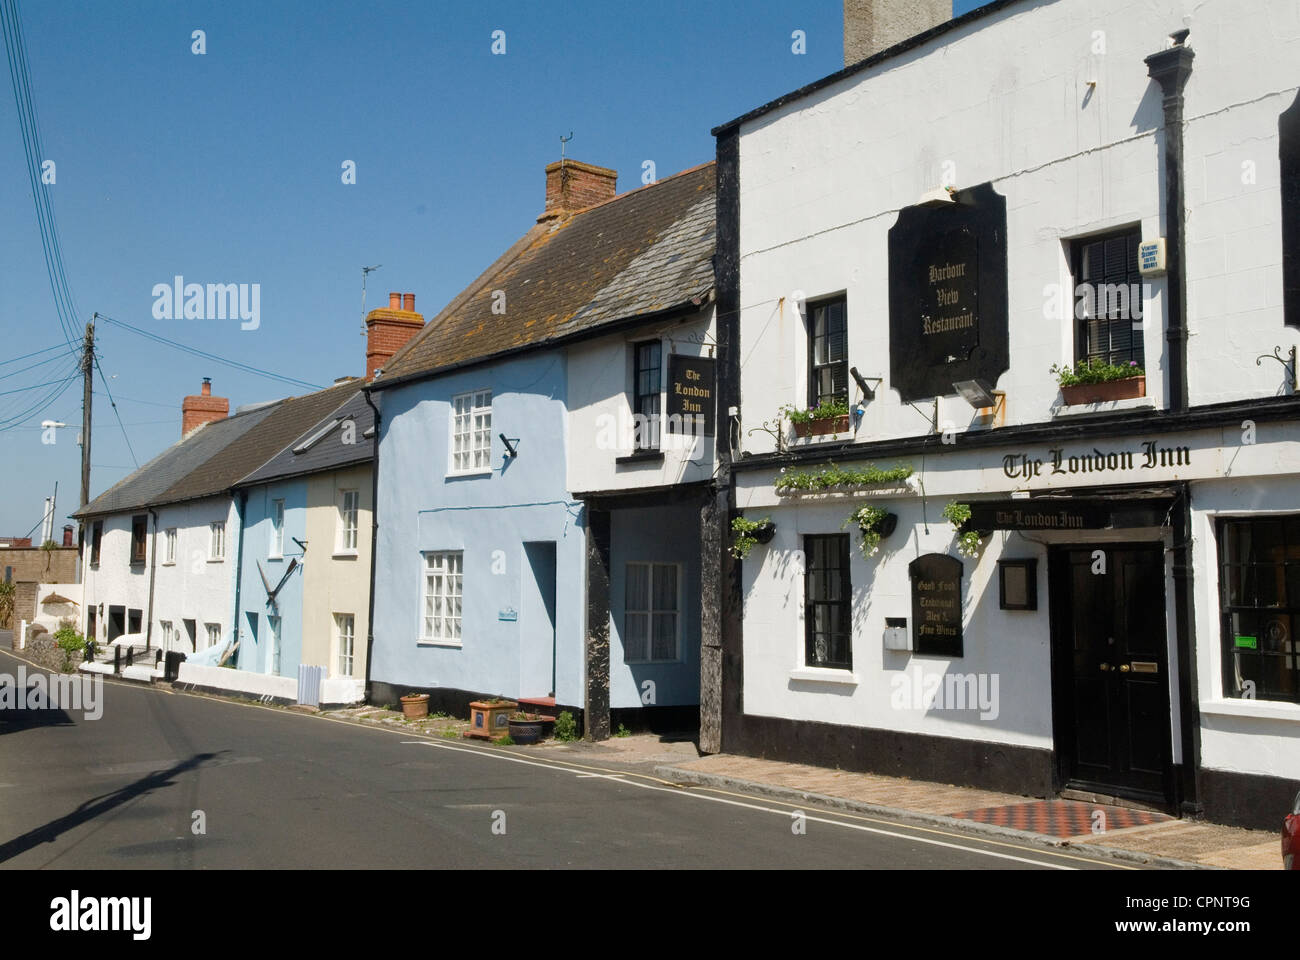 Watchet, Somerset, England 25th May 2012. The London Inn, the village pub. Stock Photo